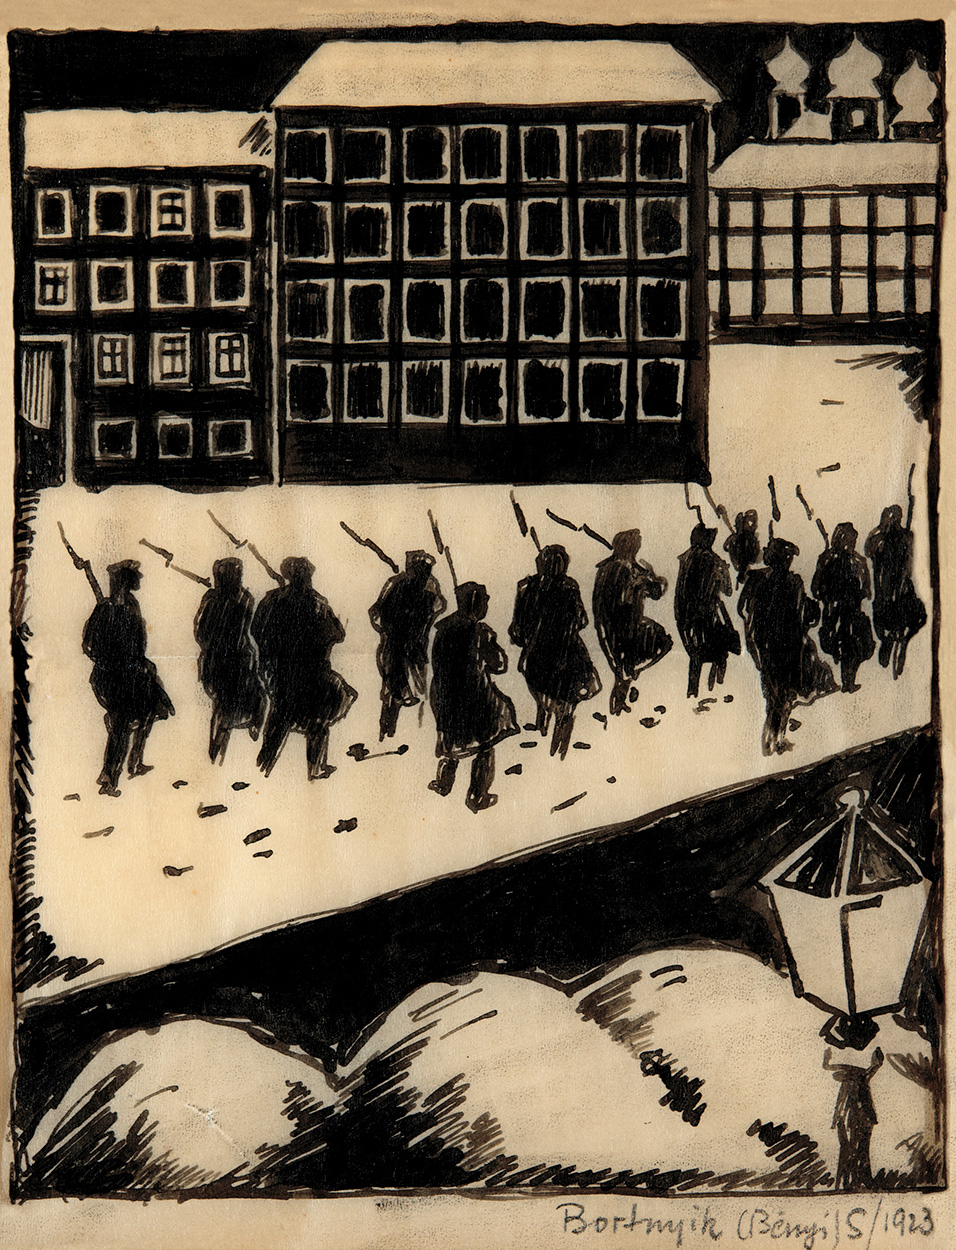 Bortnyik Sándor (1893-1976) The Twelve – Illustration for Aleksandr Blok's poem The Twelve, Berlin, 1923